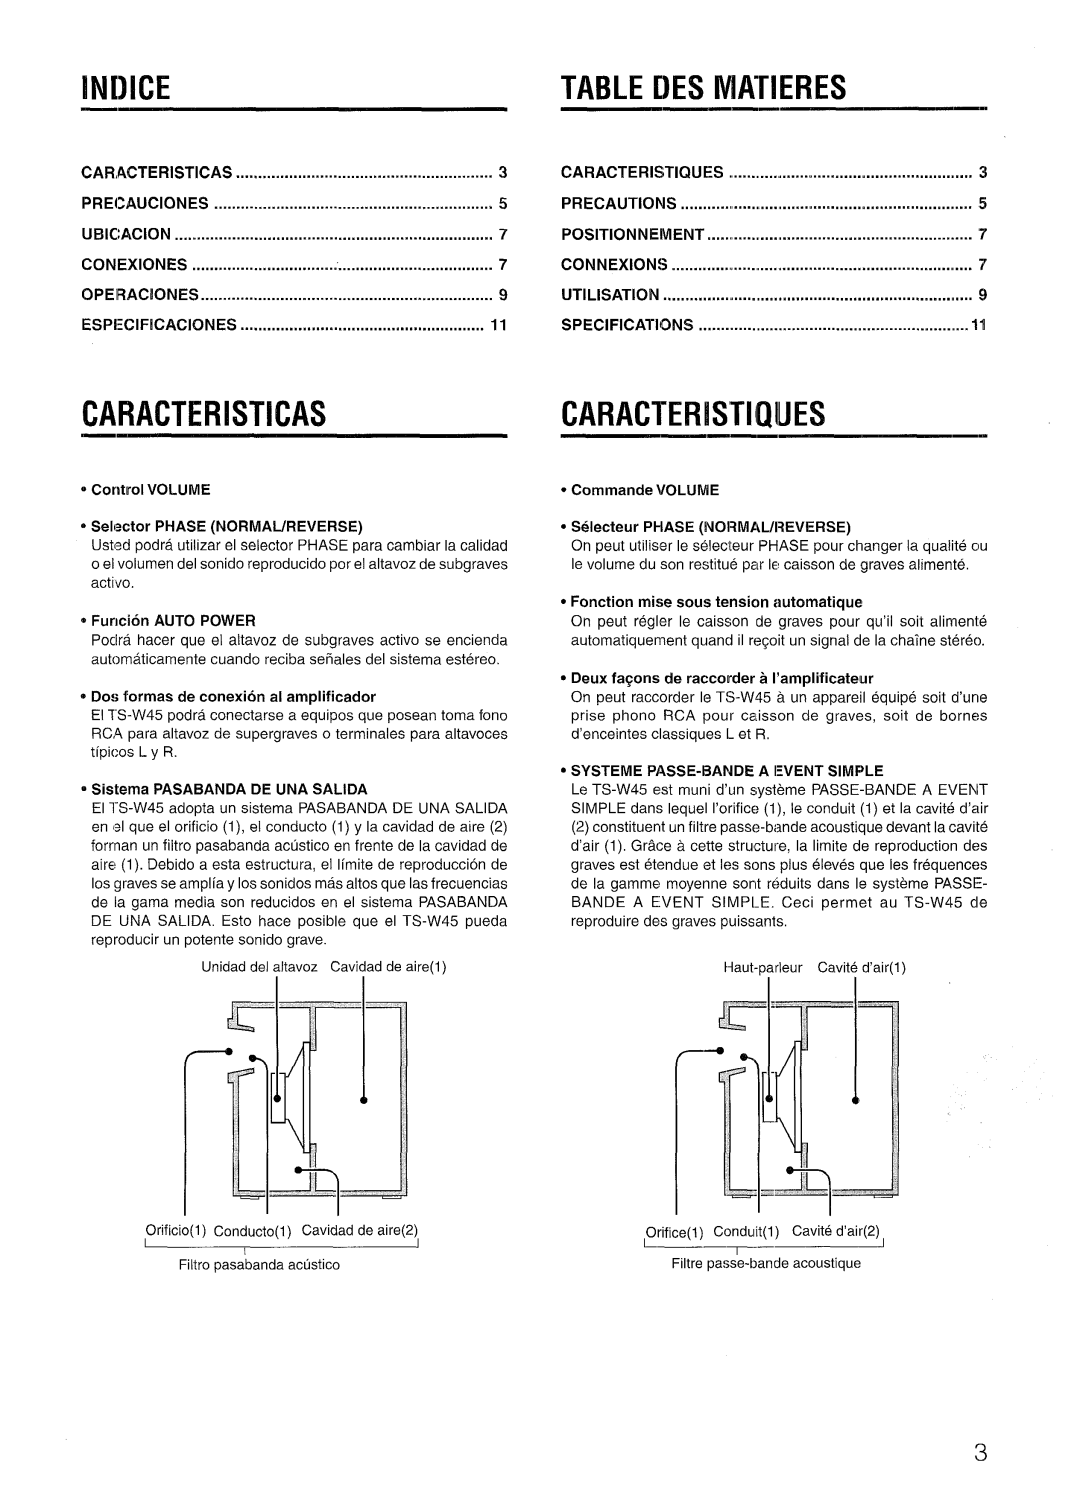 Aiwa TS-W45 manual lNICE, CARACTERISTICASCARACTERISTIIQllJES, Matieres 